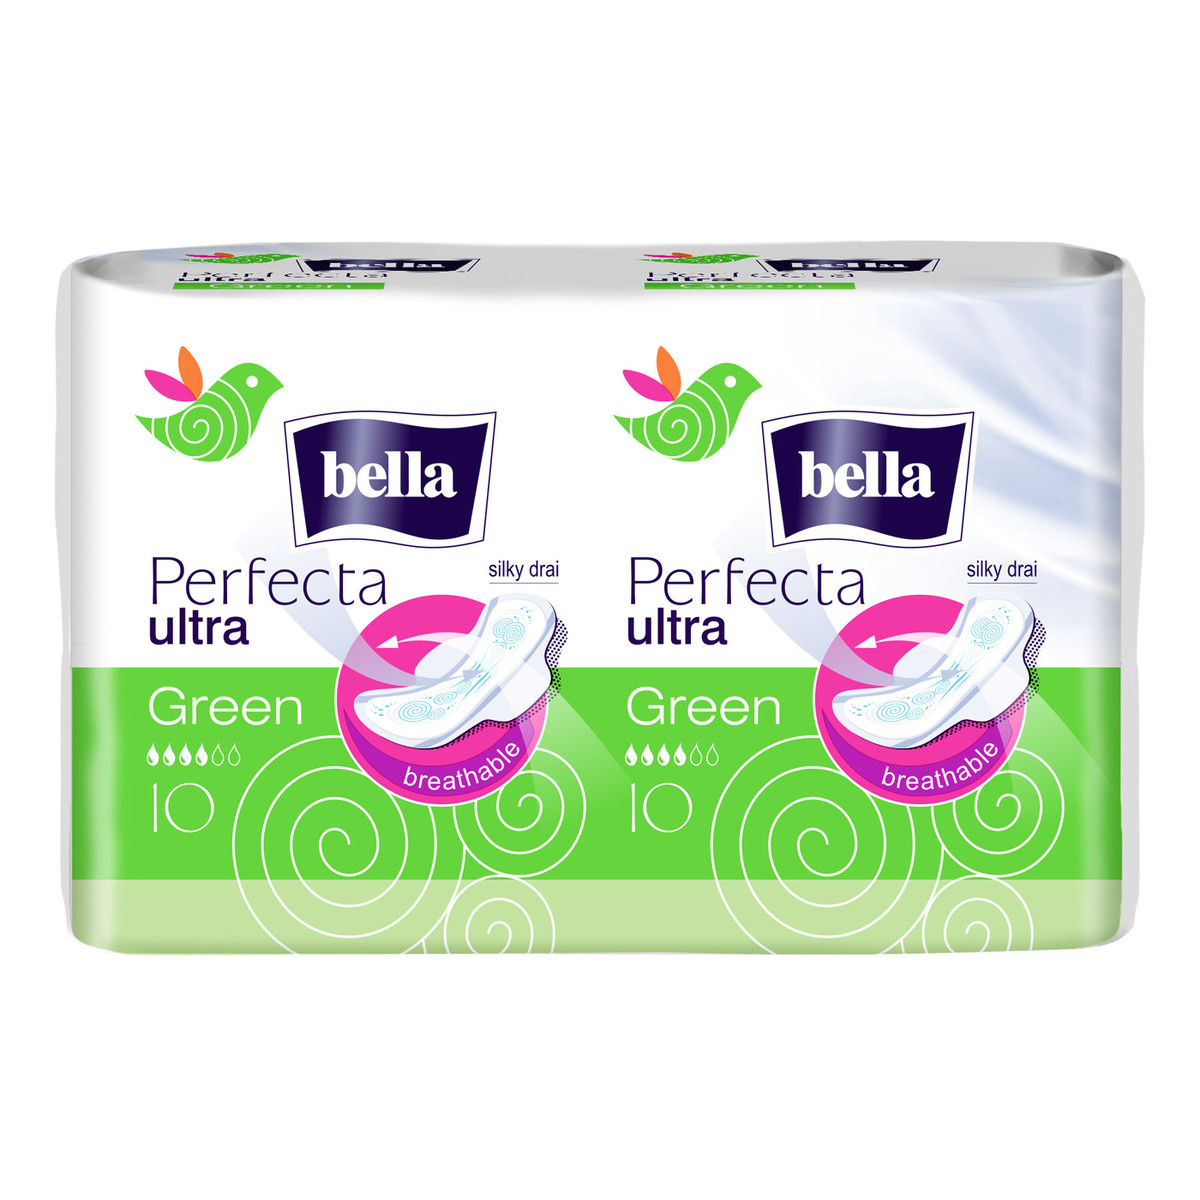 Bella Ultra Green Perfecta Podpaski Higieniczne 10 + 10 Gratis